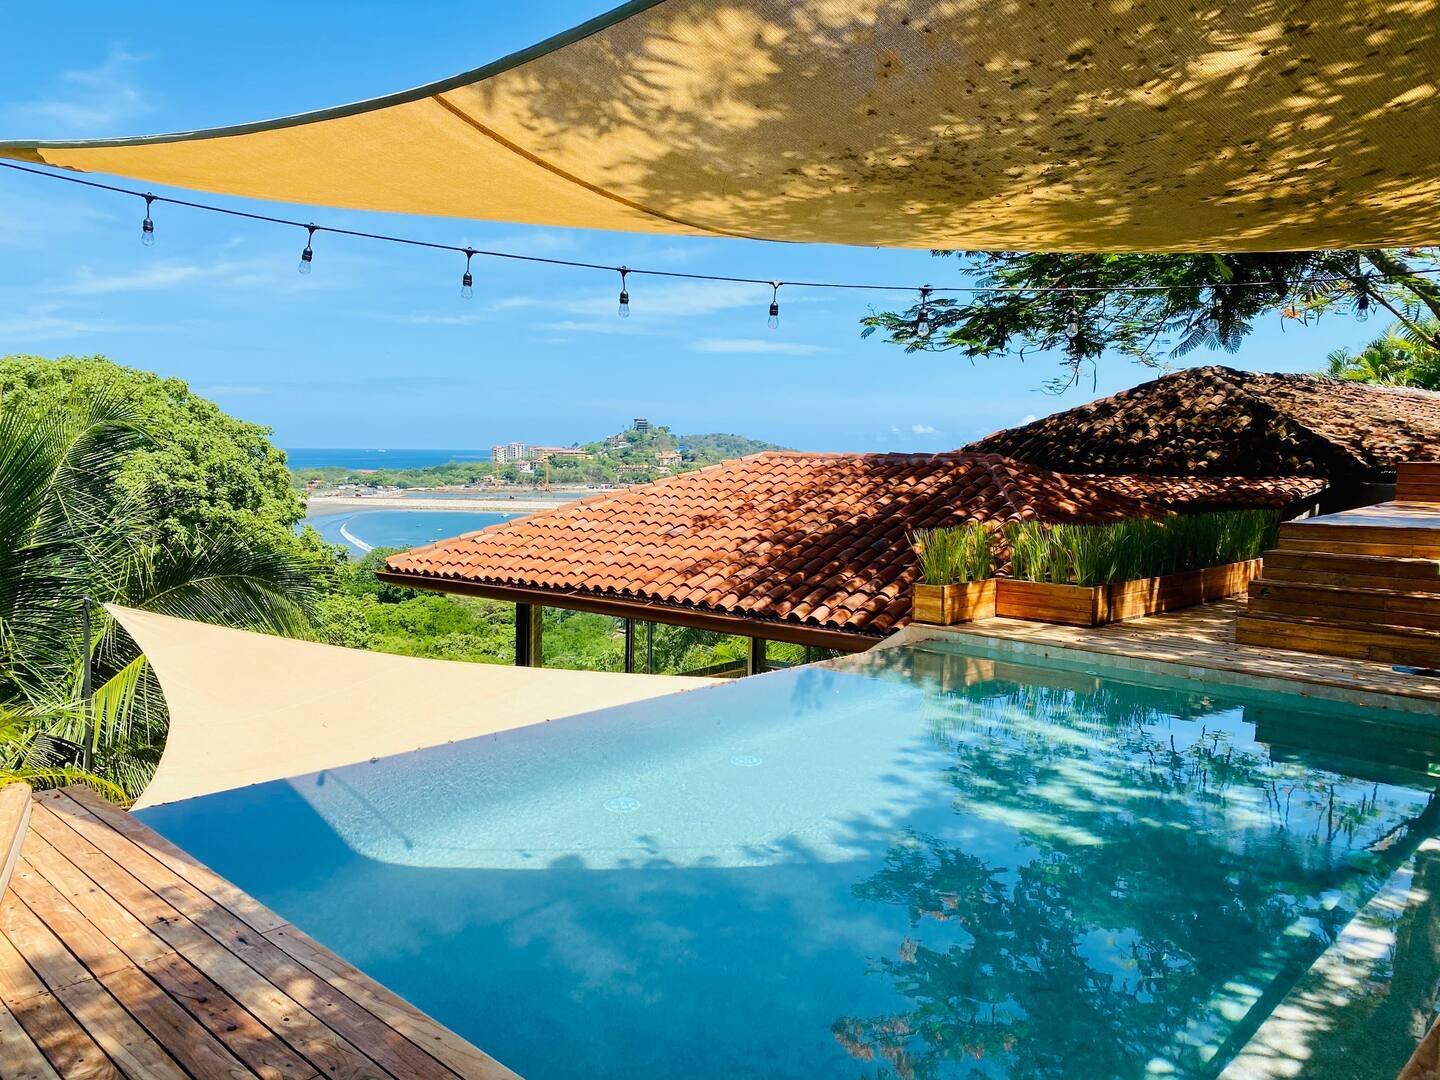 Casa Cielo ocean-view luxury home Costa Rica